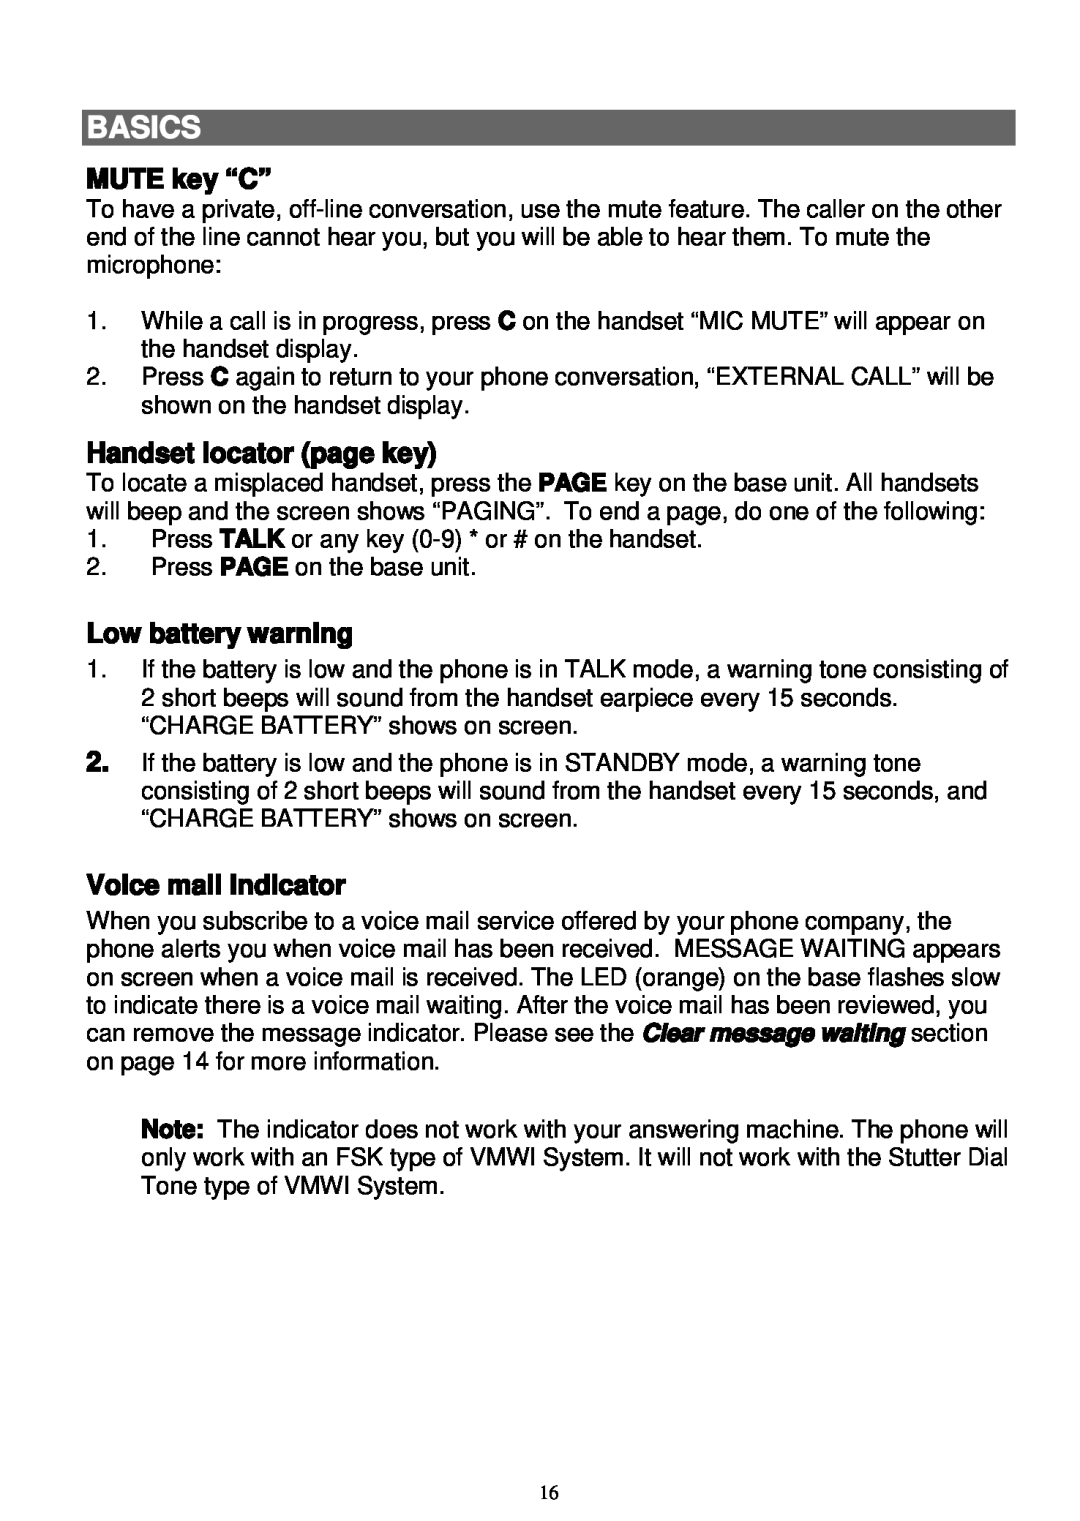 Sanyo LNS-W10 instruction manual MUTE key “C”, Handset locator page key, Low battery warning, Voice mail indicator, Basics 